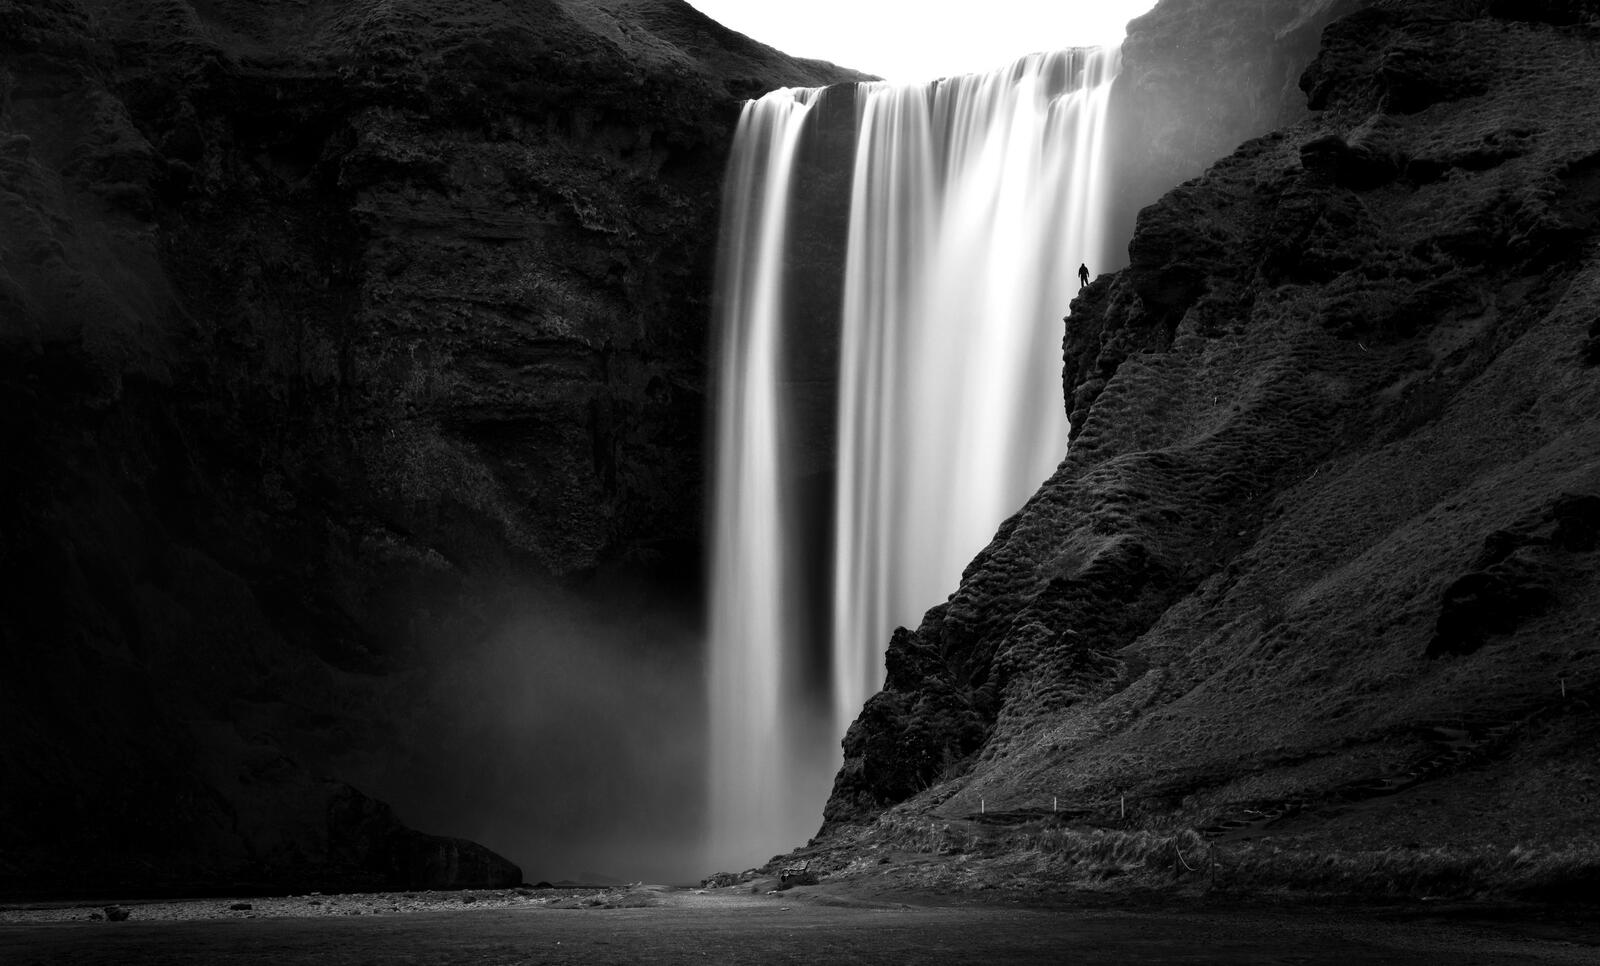 Free photo Monochrome photo with a waterfall